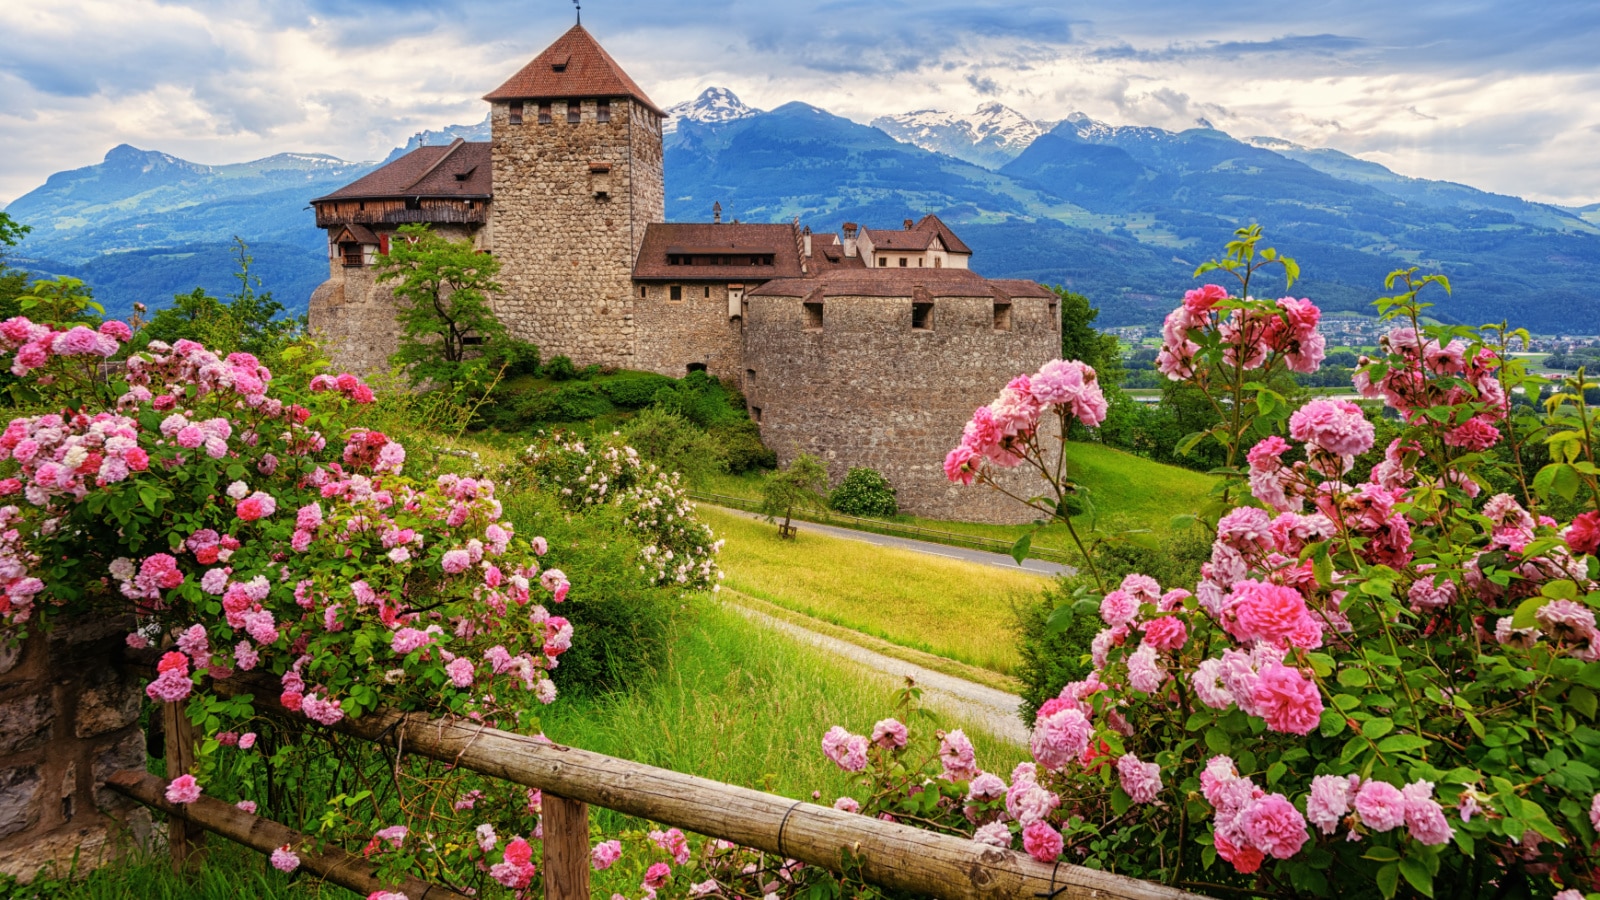 Vaduz castle, Liechtenstein, in the Alps mountains, with beautiful blooming pink rose flowers